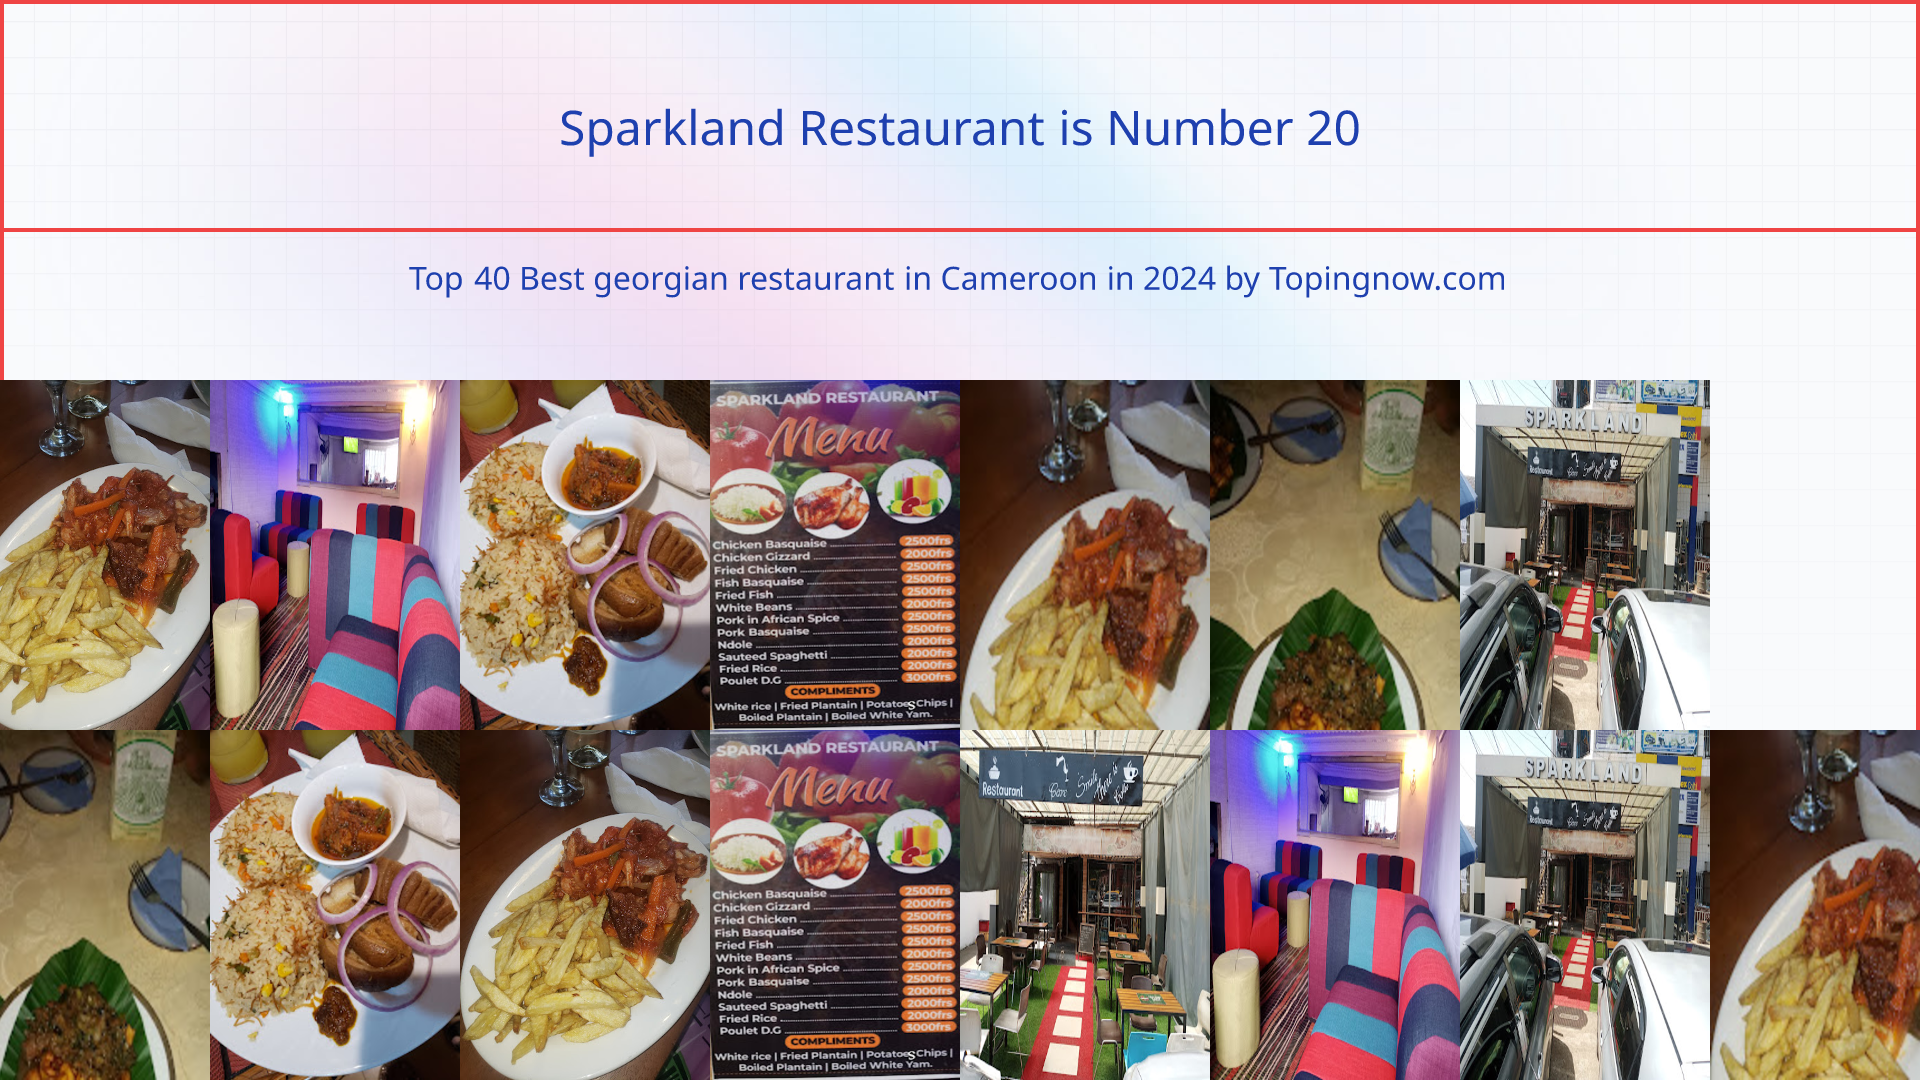 Sparkland Restaurant: Top 40 Best georgian restaurant in Cameroon in 2024